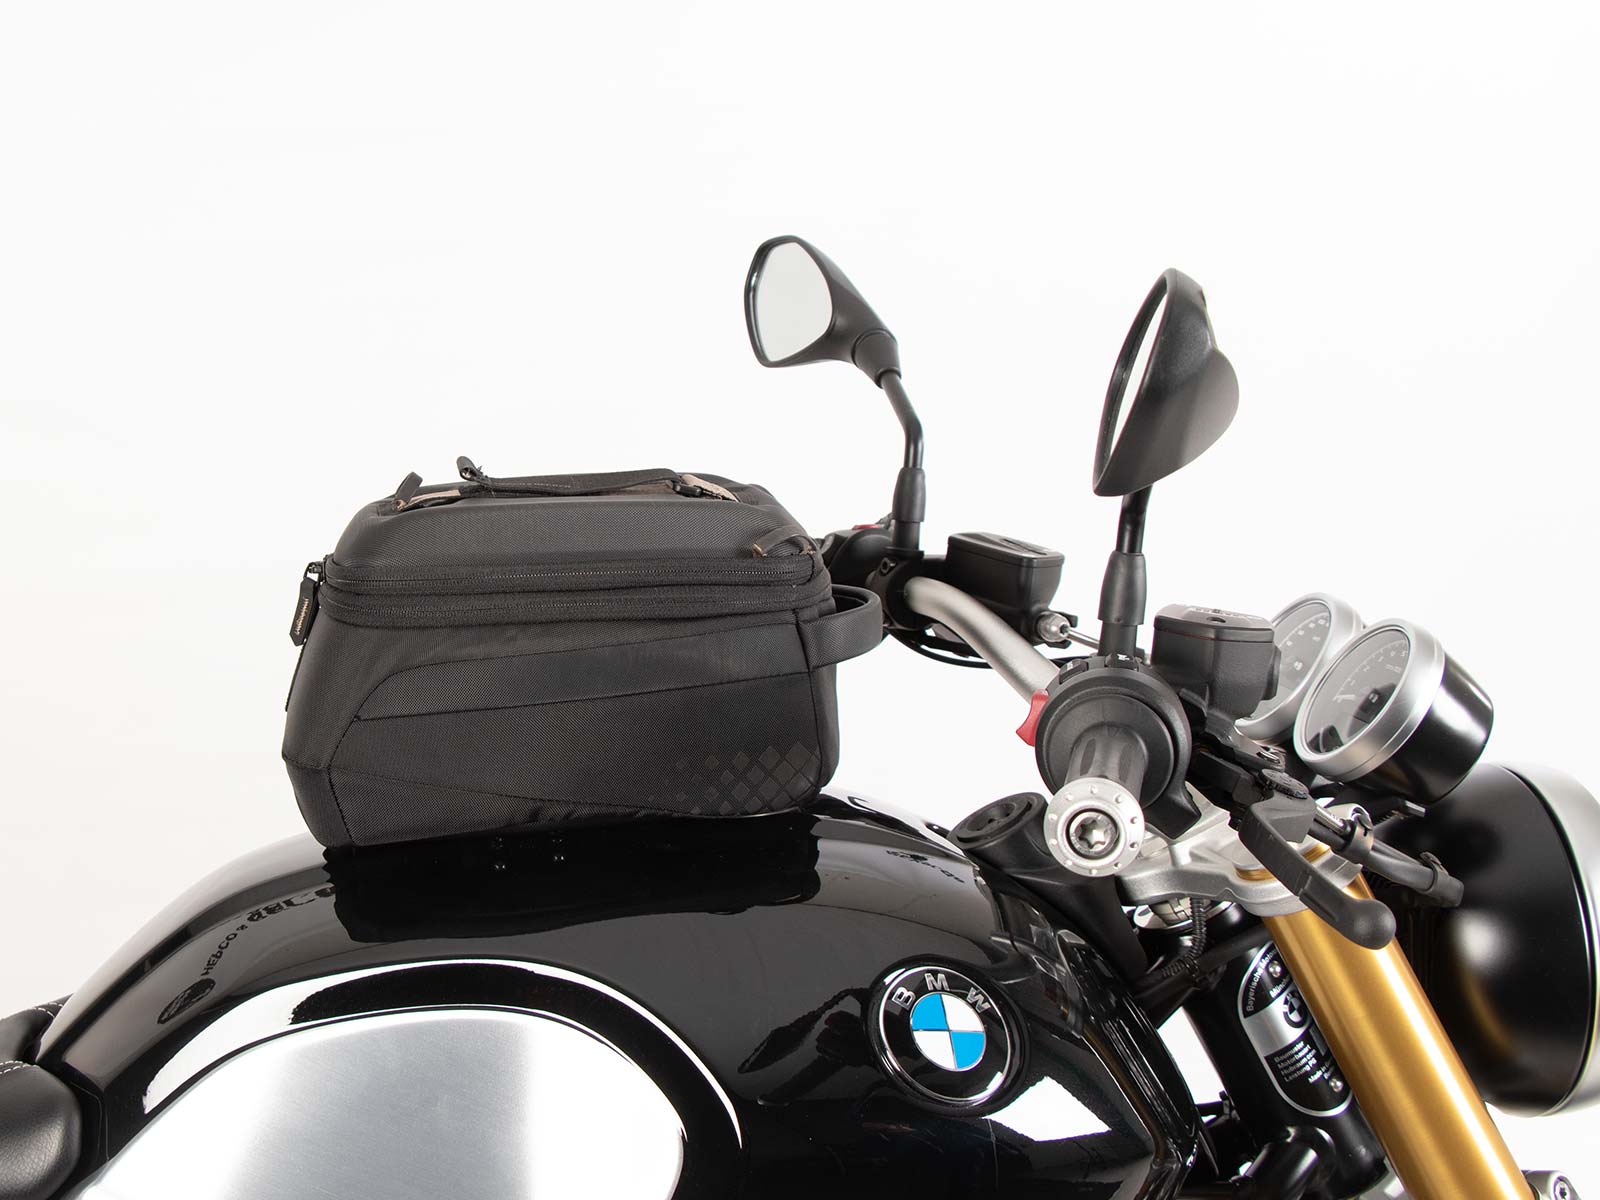 Tankring BASIC incl. fastener for tankbag for BMW R nineT (2014-2016)